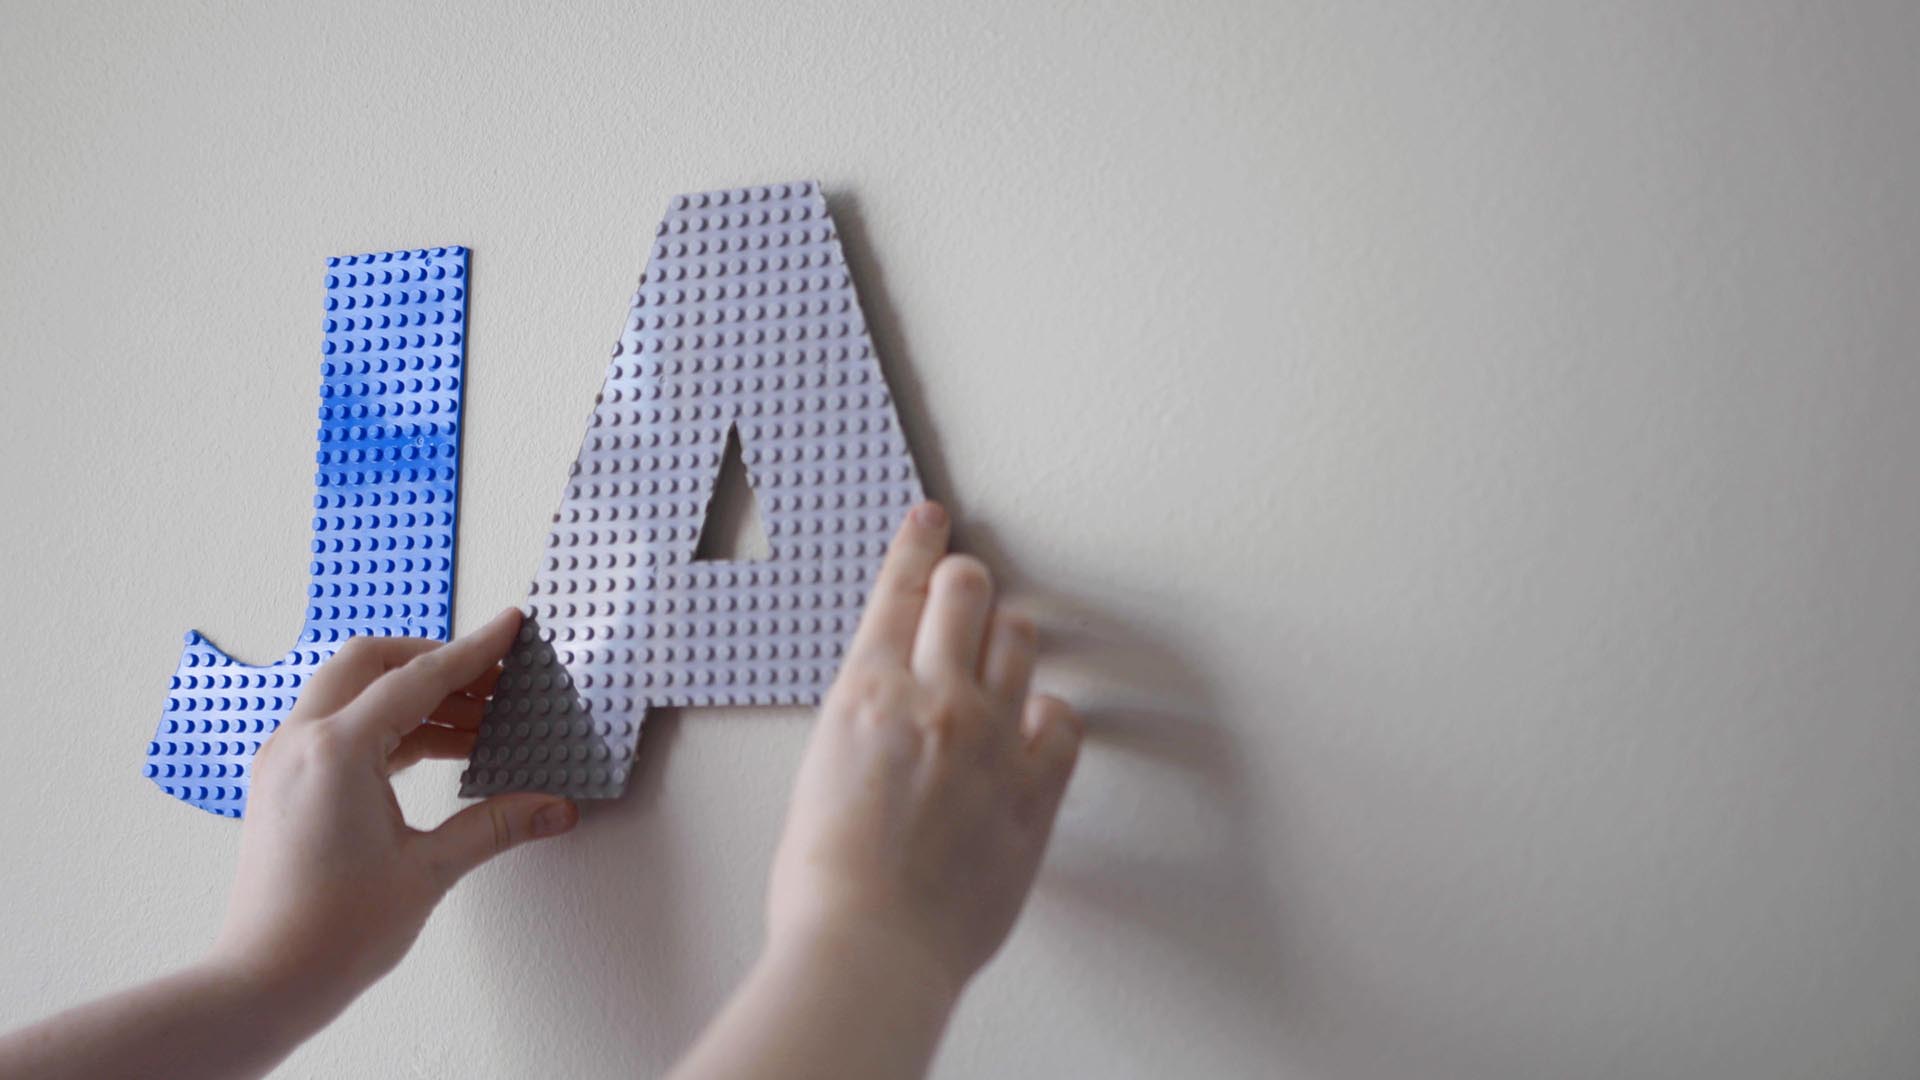 Assemble the LEGO® building blocks.